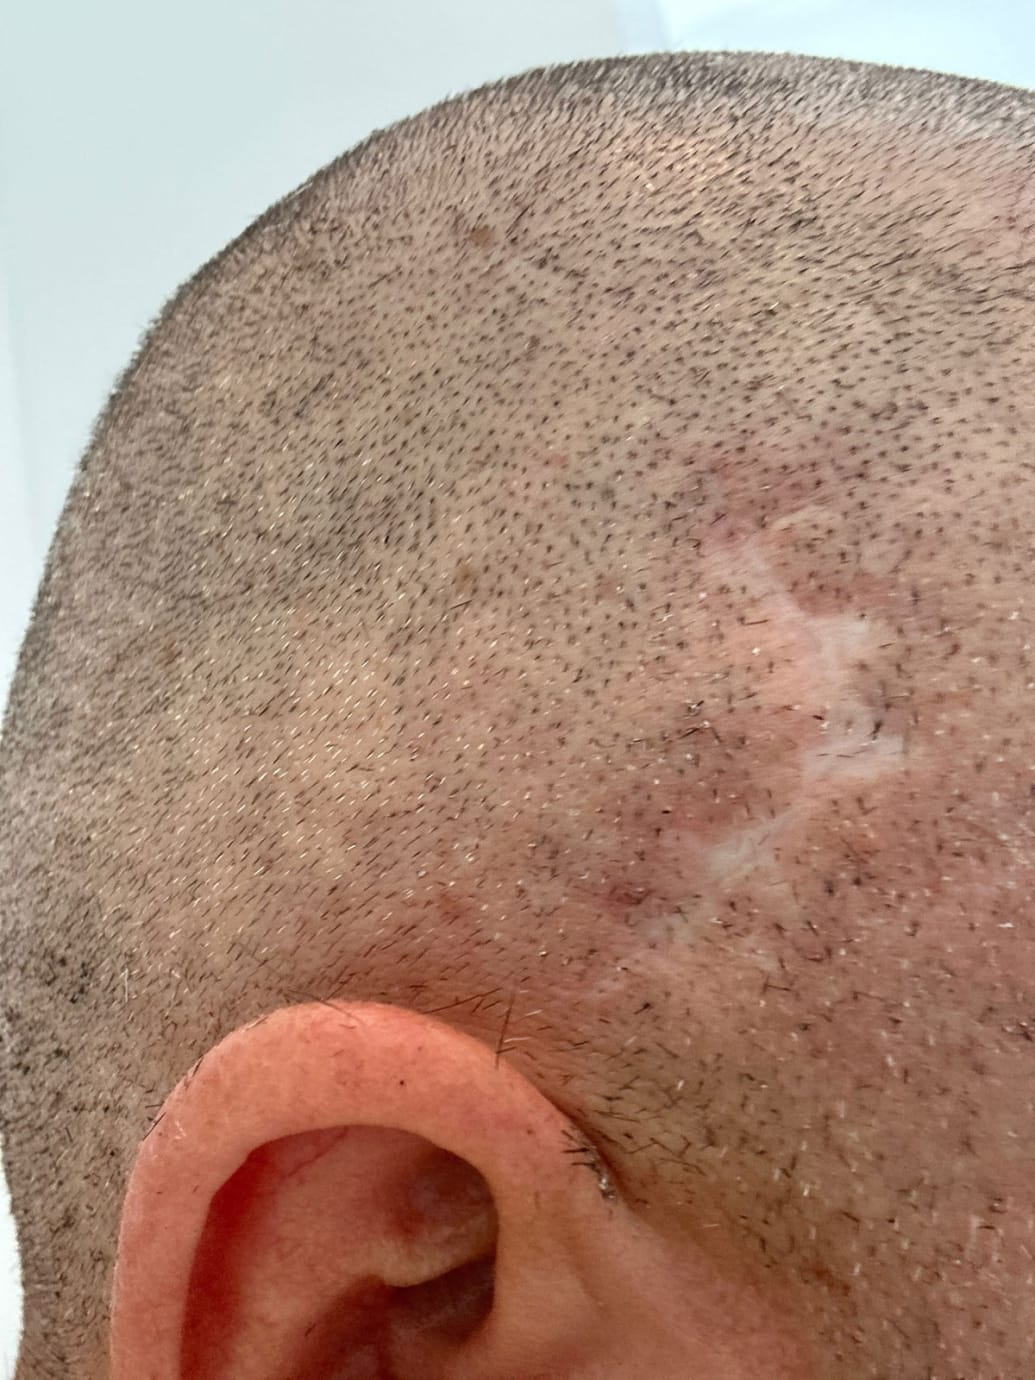 A jagged scar on Eric Lamaze’s head.